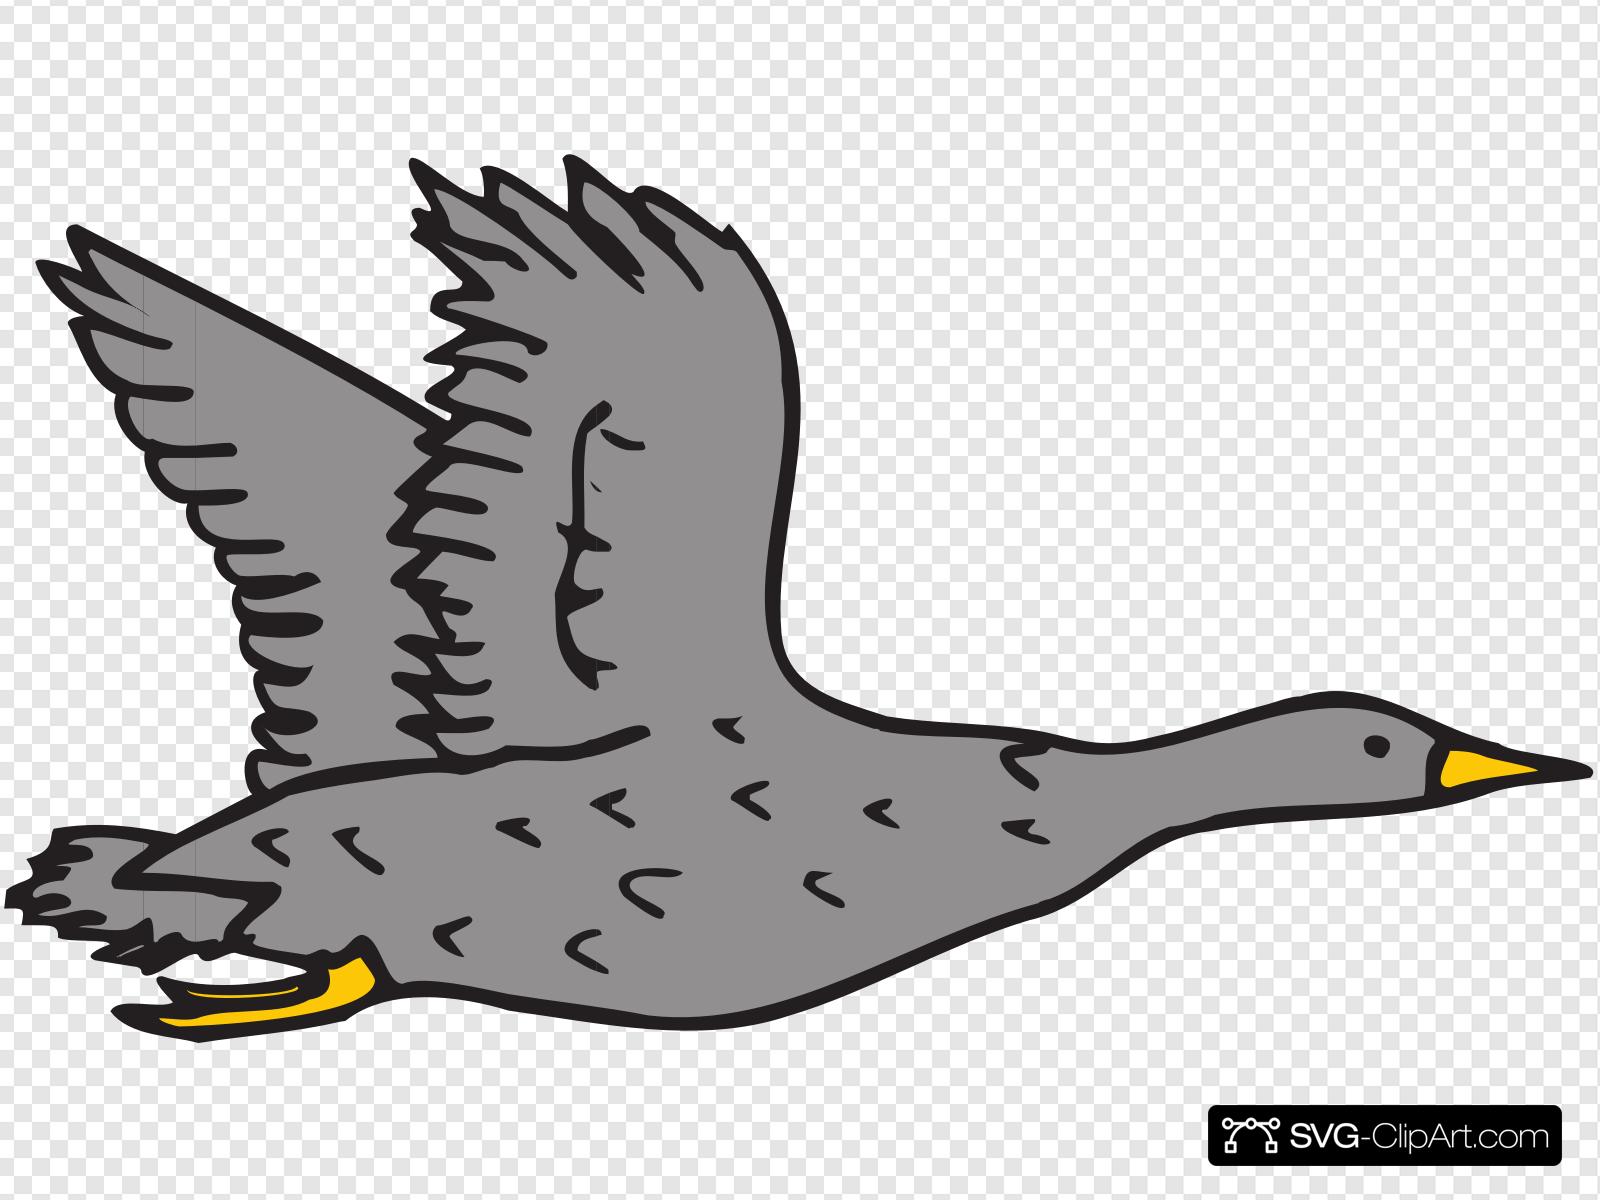 Gray Bird Clip art, Icon and SVG.